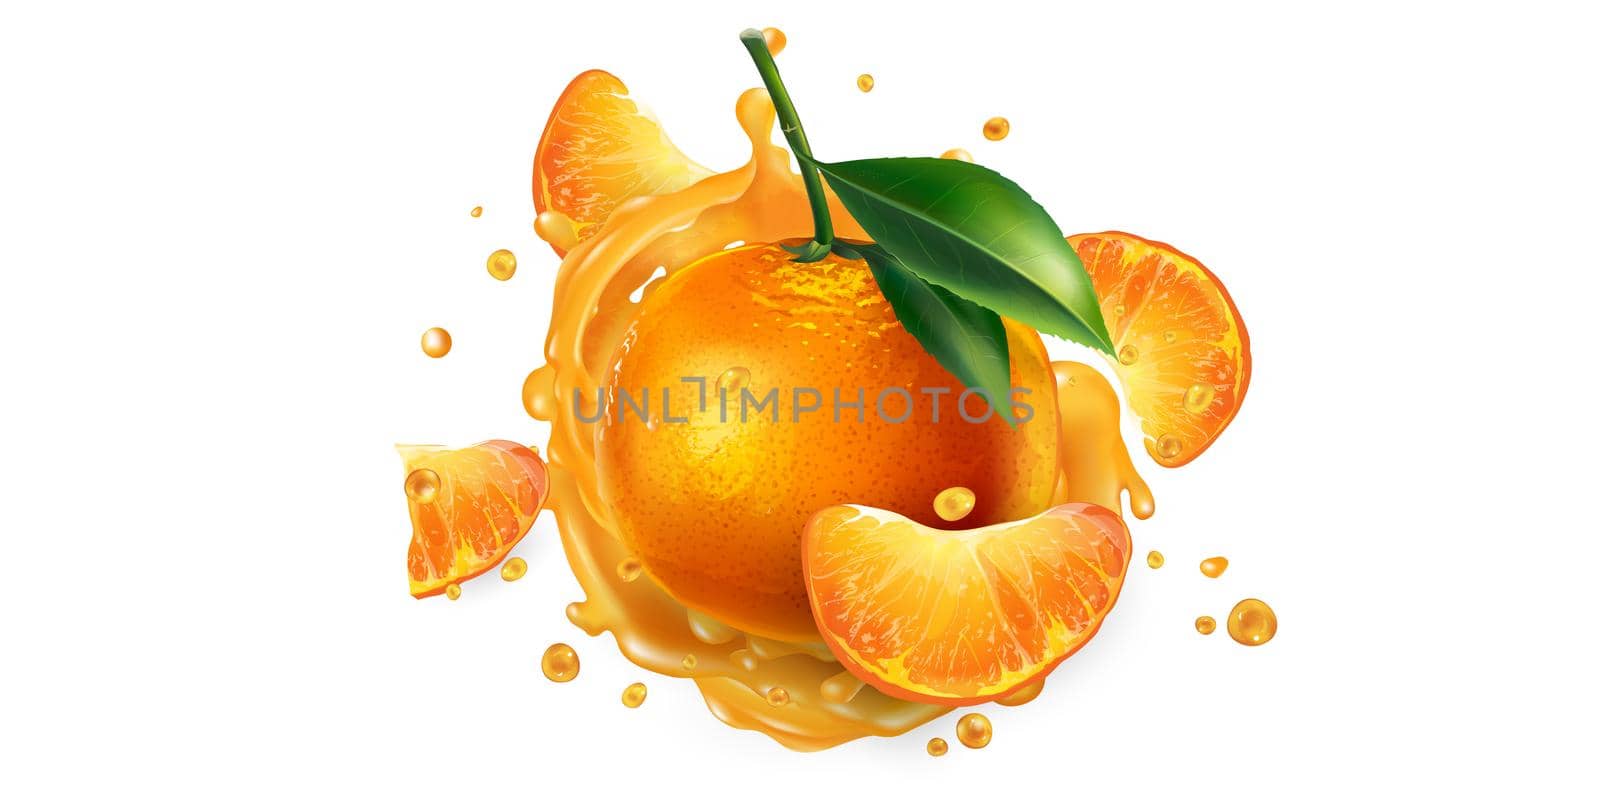 Whole and sliced mandarins in fruit juice splashes on a white background. Realistic style illustration.